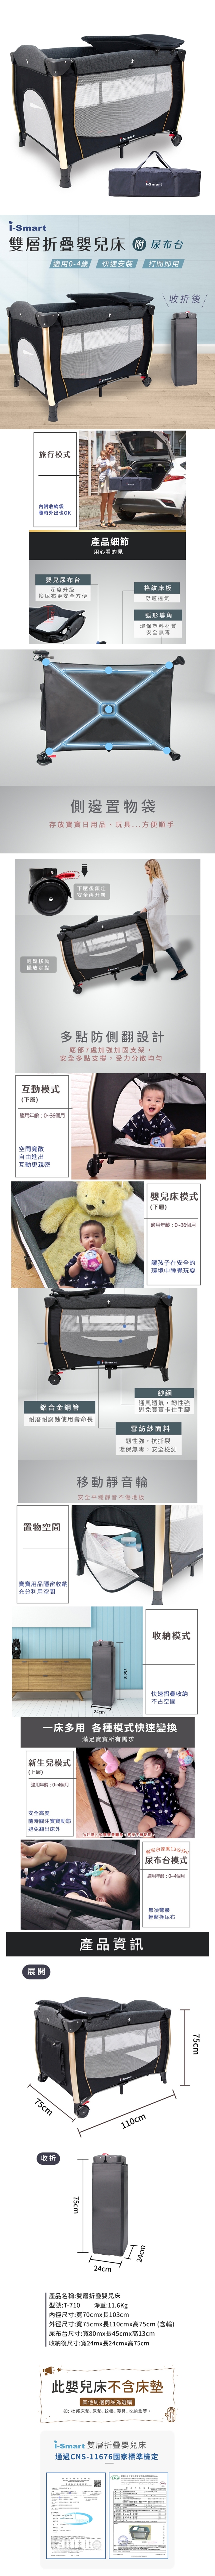 i-Smart-雙層折疊嬰兒床(附收納袋和尿布台)T-710